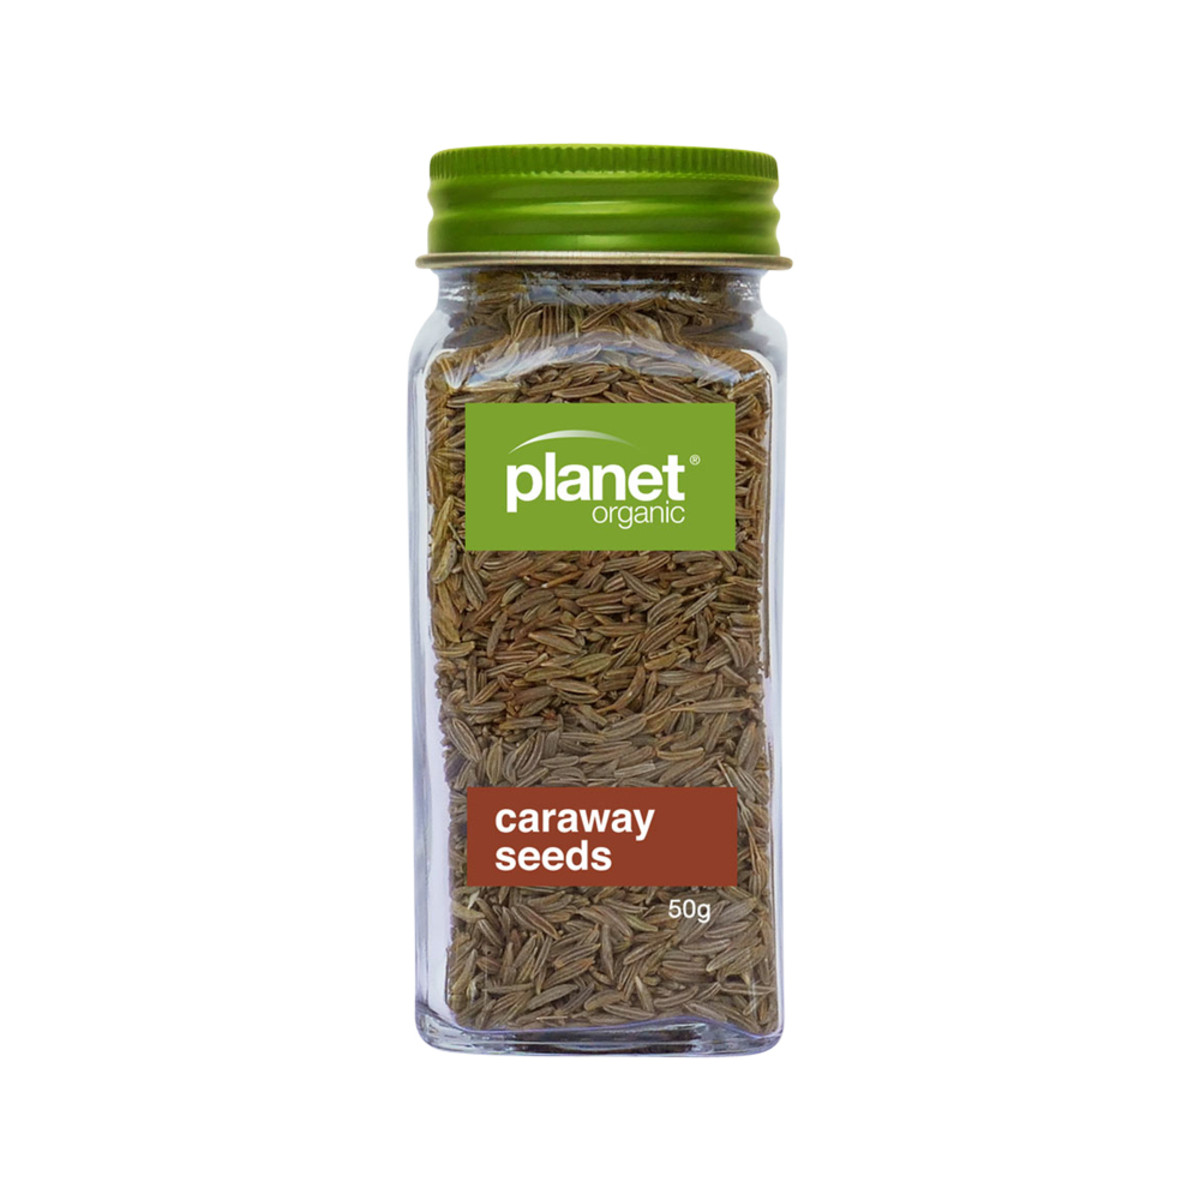 Planet Organic Organic Shaker Caraway Seed 50g